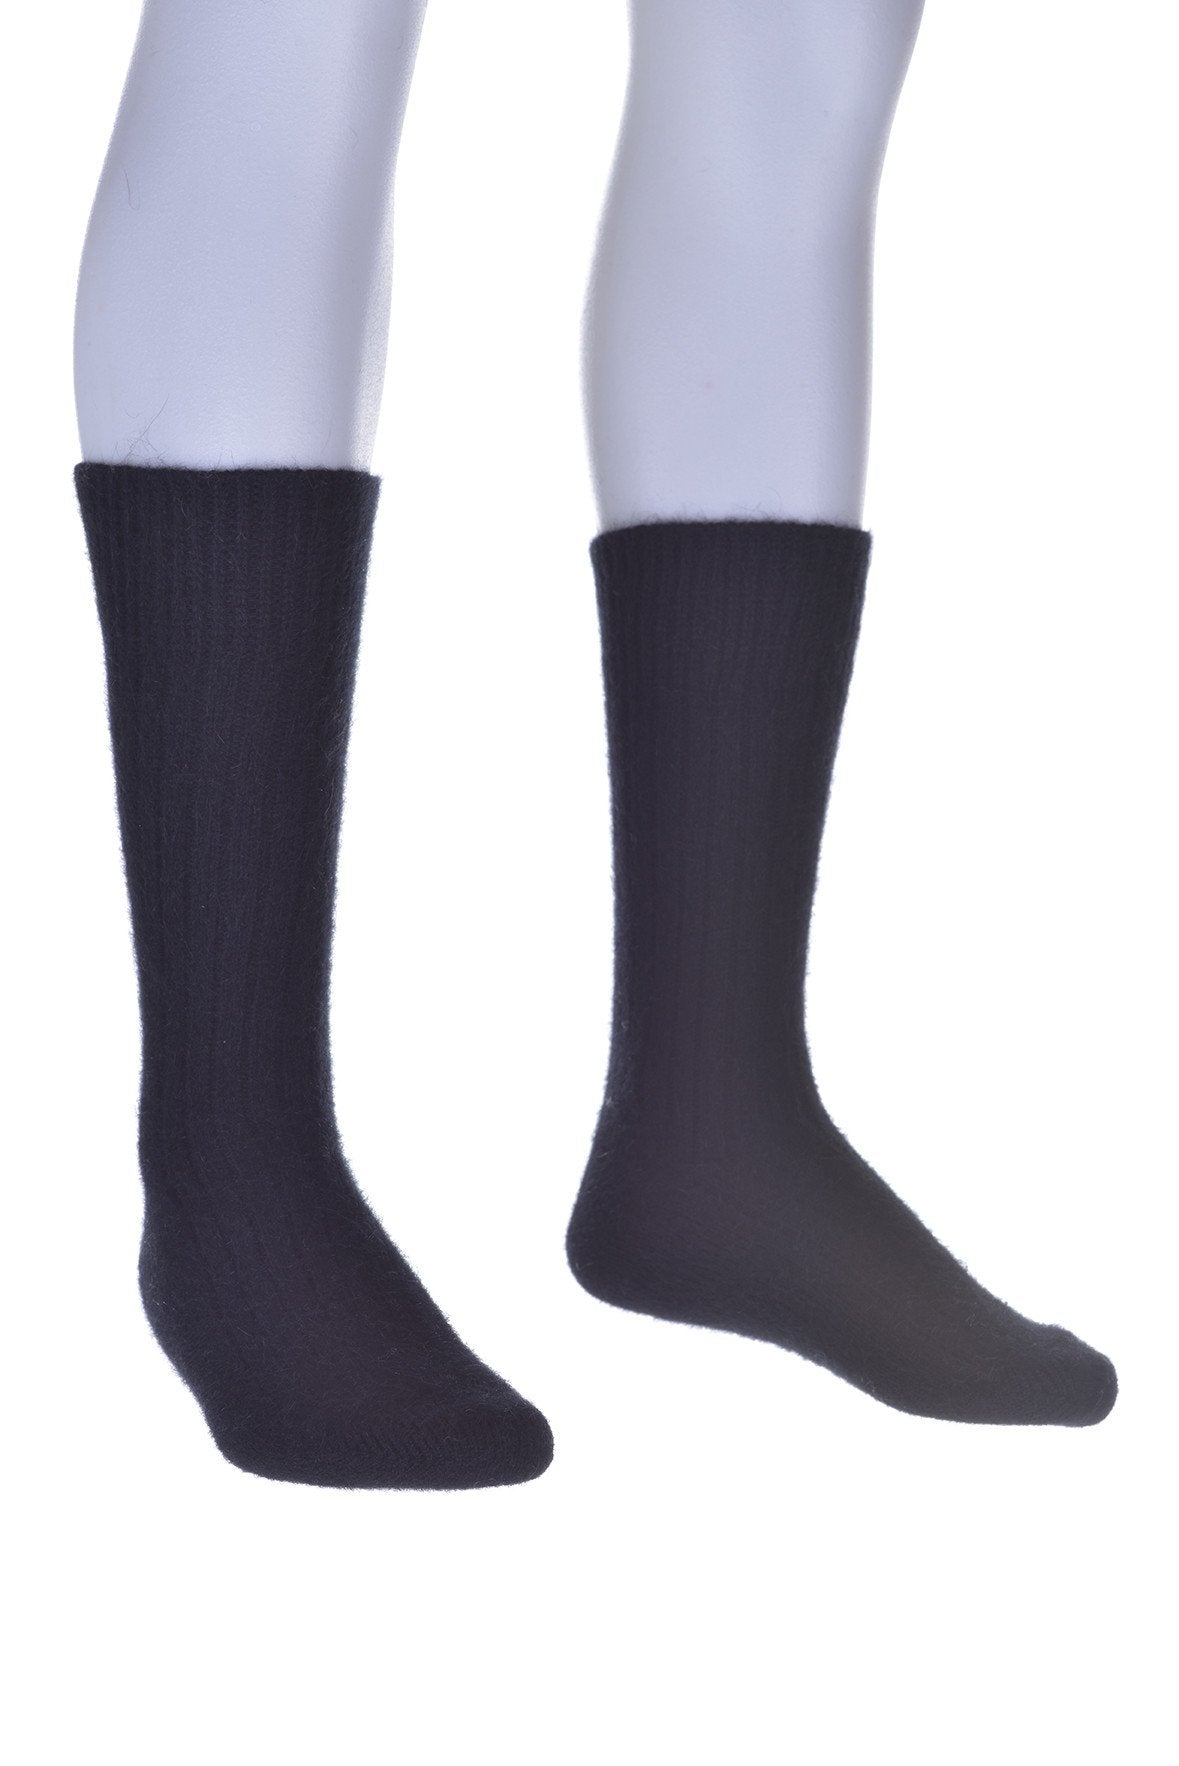 Possum Merino Rib Socks - Black